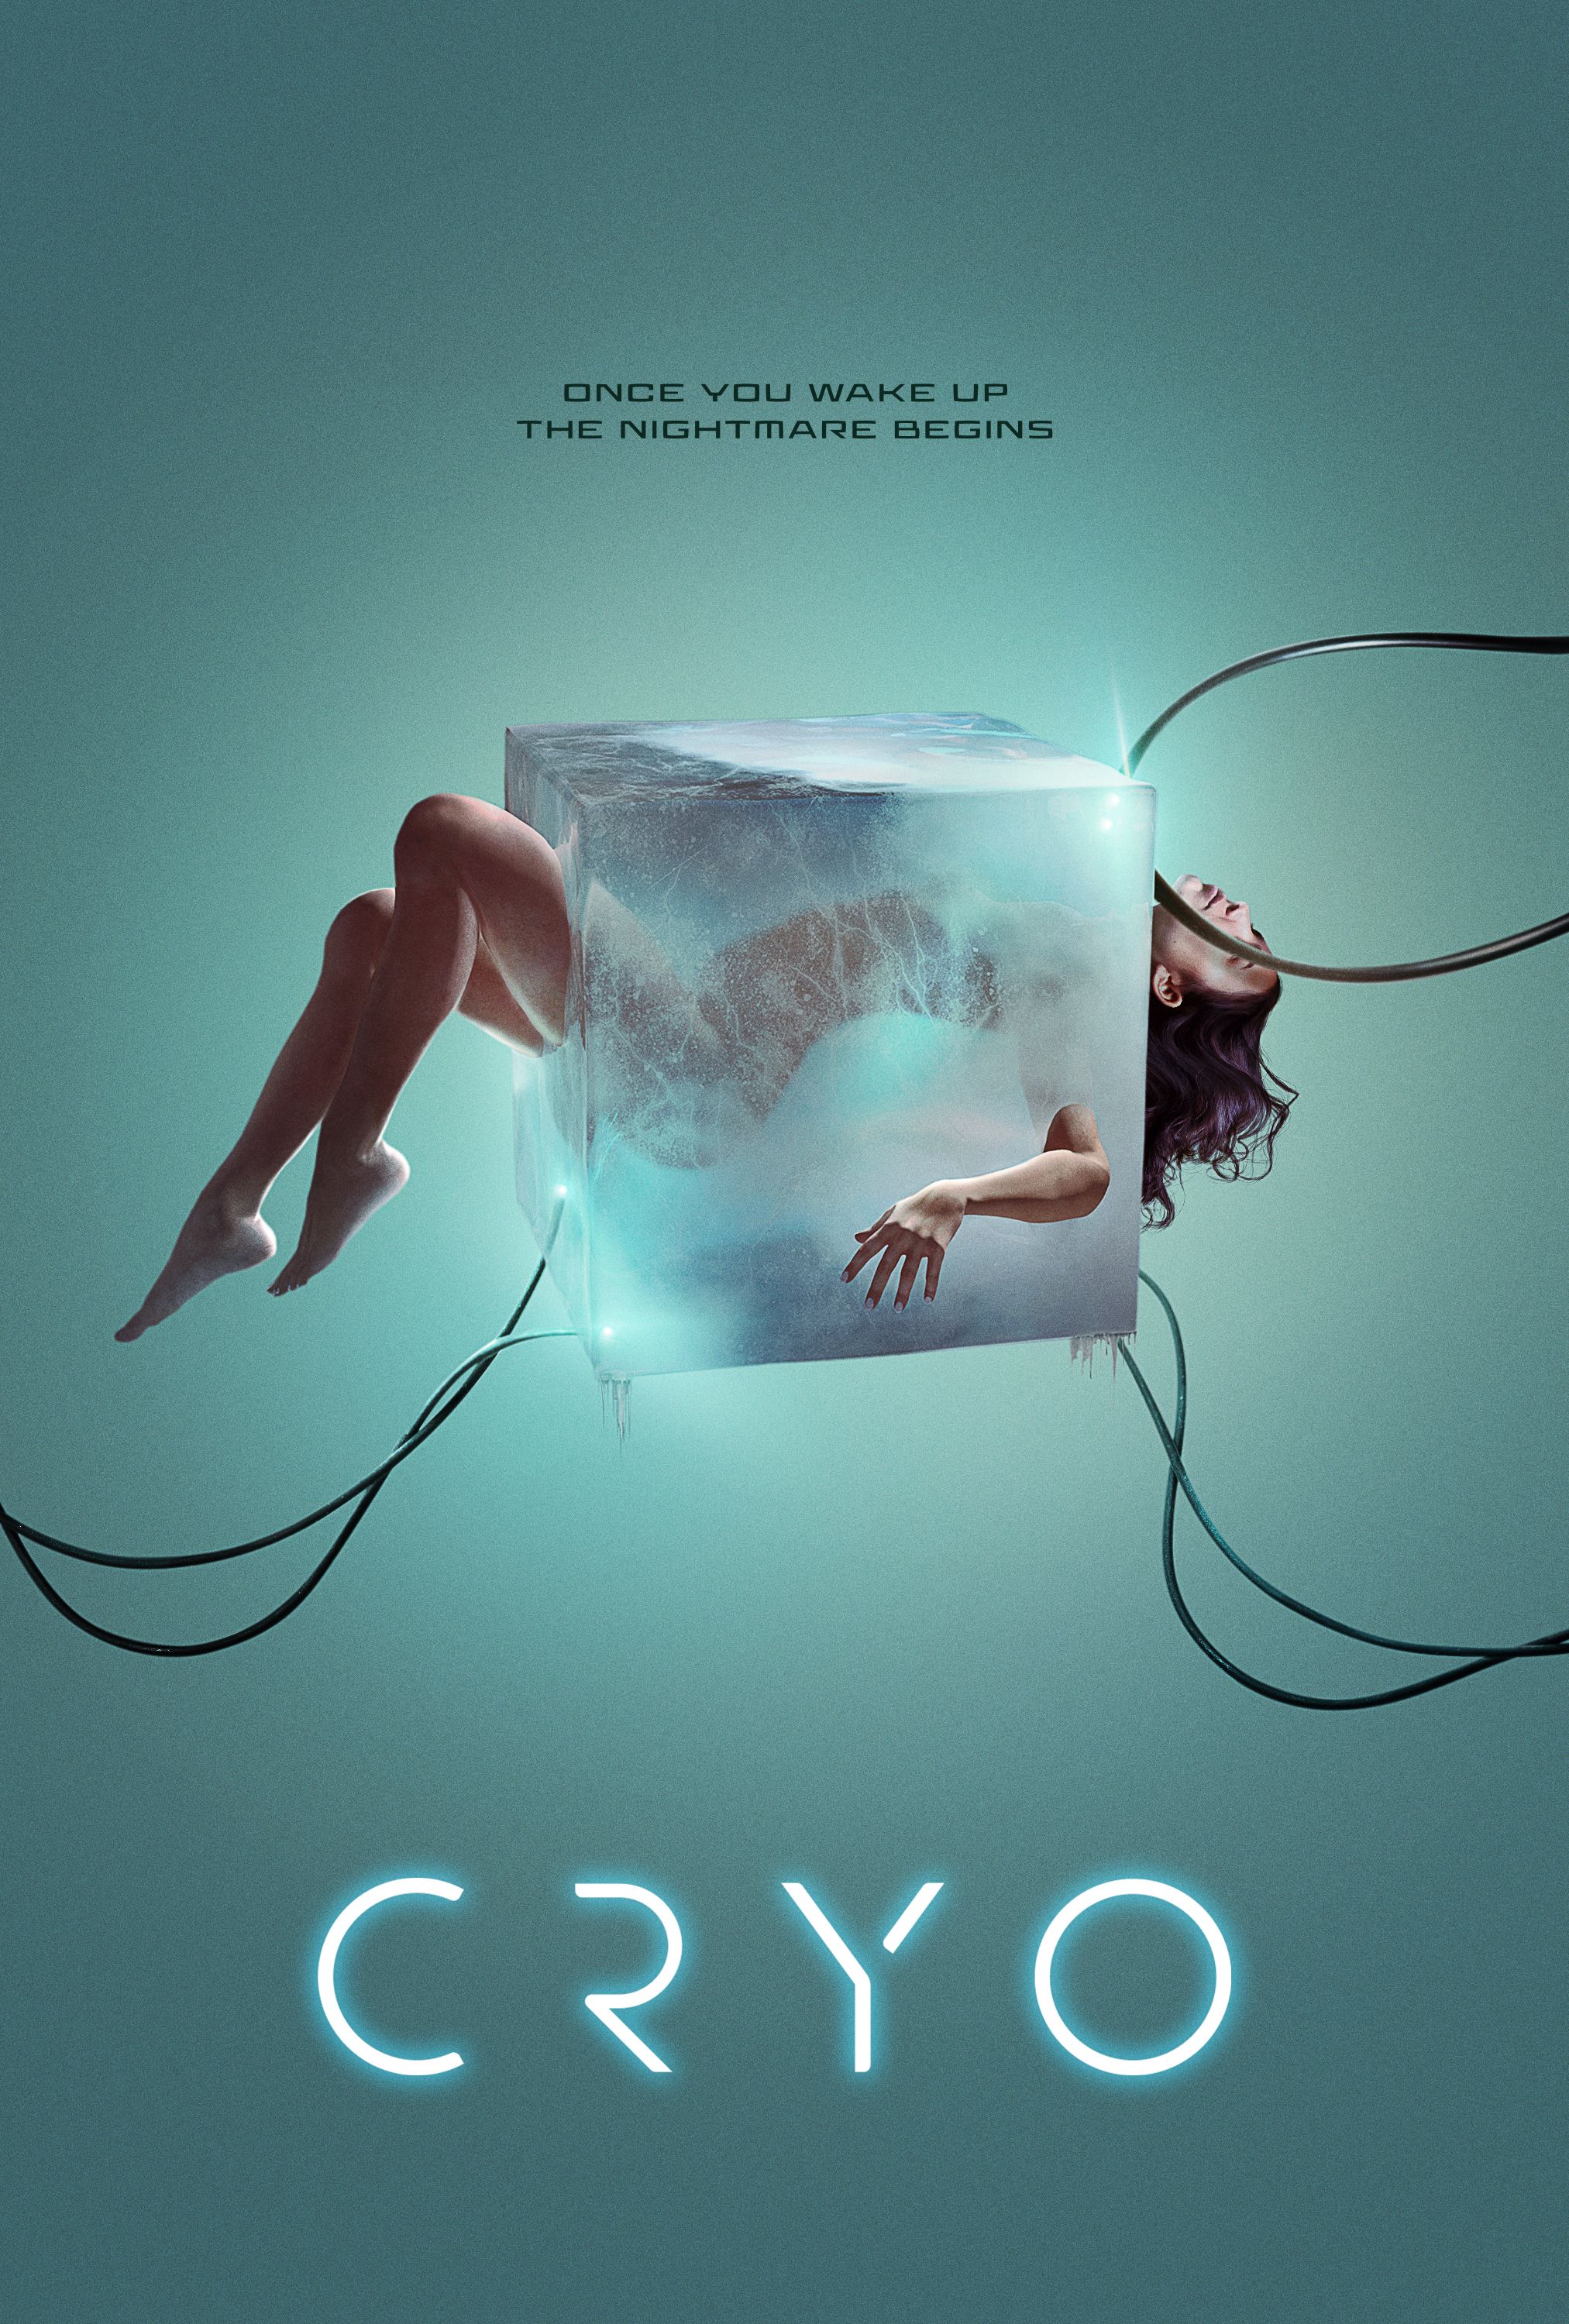 Cryo Trailer & Key Art Revealed [EXCLUSIVE]